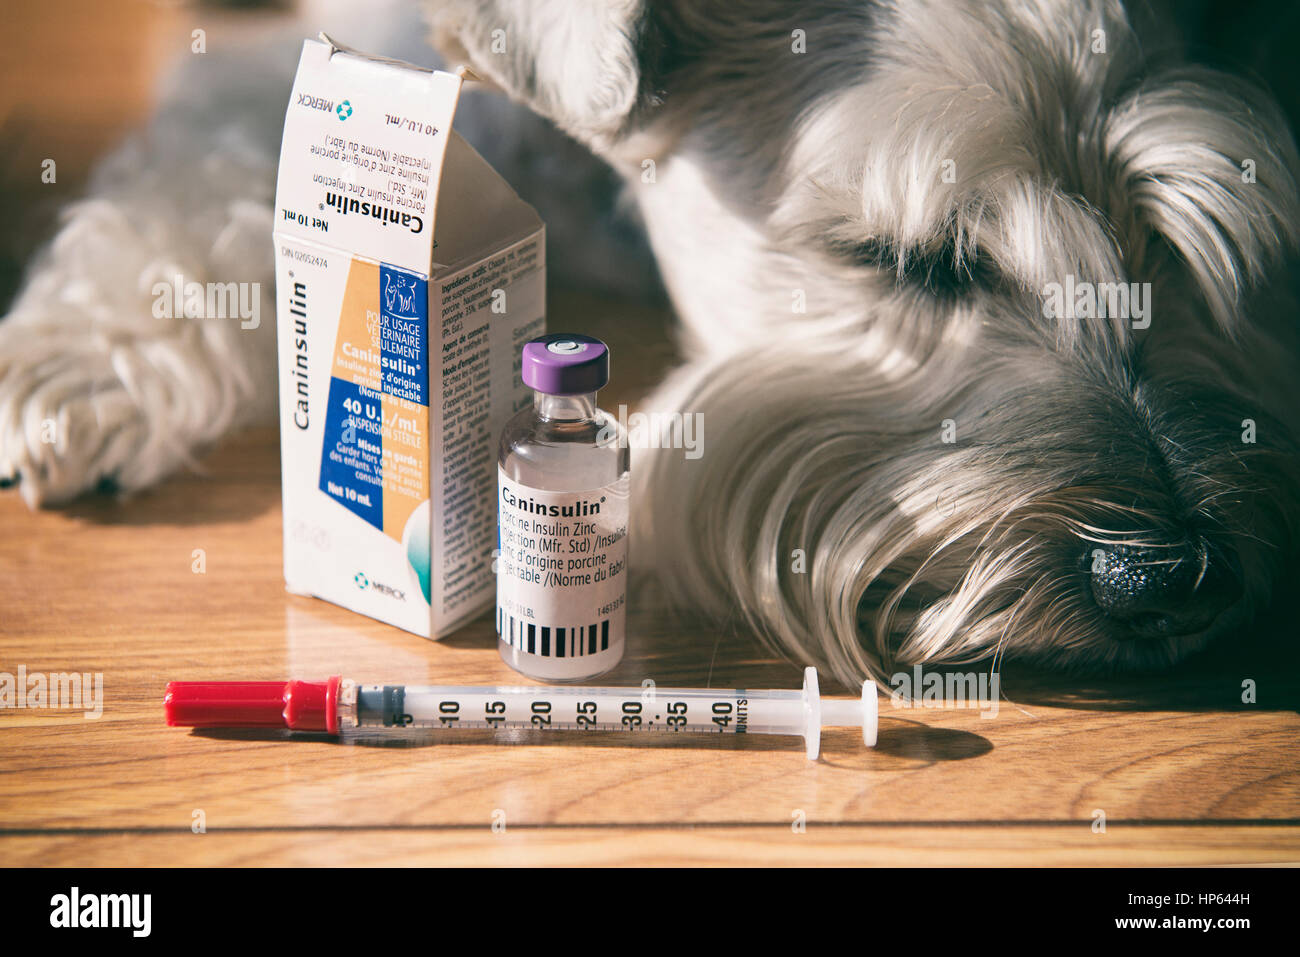 Diabetic Dog, Pet, Canine Diabetes, Insulin Vial and Syringe Stock Photo